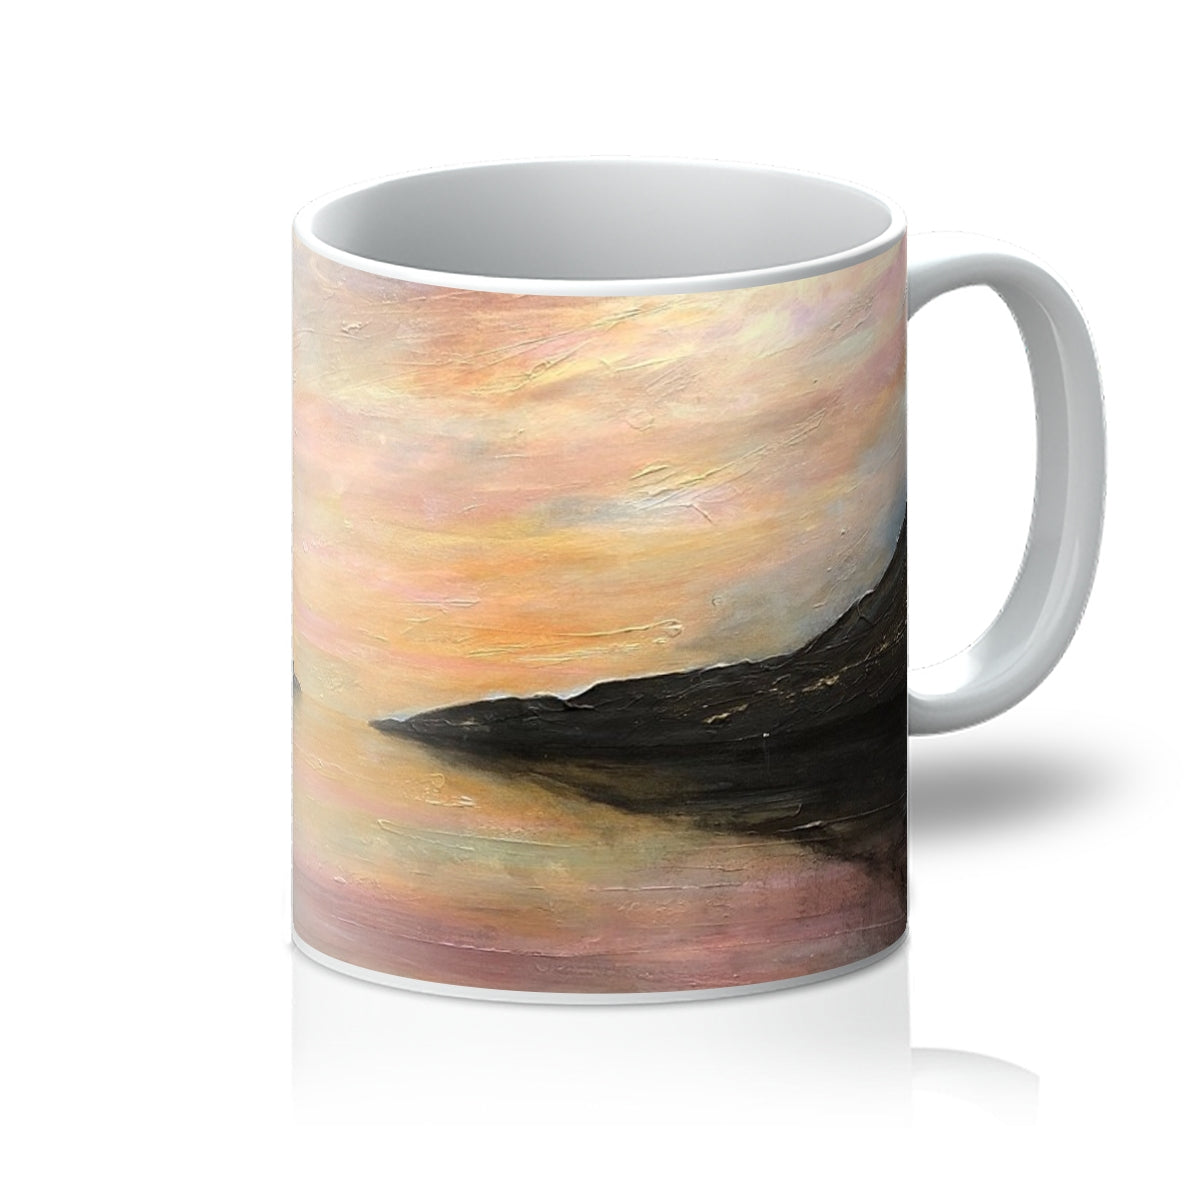 Loch Ness Glow Art Gifts Mug-Mugs-Scottish Lochs & Mountains Art Gallery-11oz-White-Paintings, Prints, Homeware, Art Gifts From Scotland By Scottish Artist Kevin Hunter